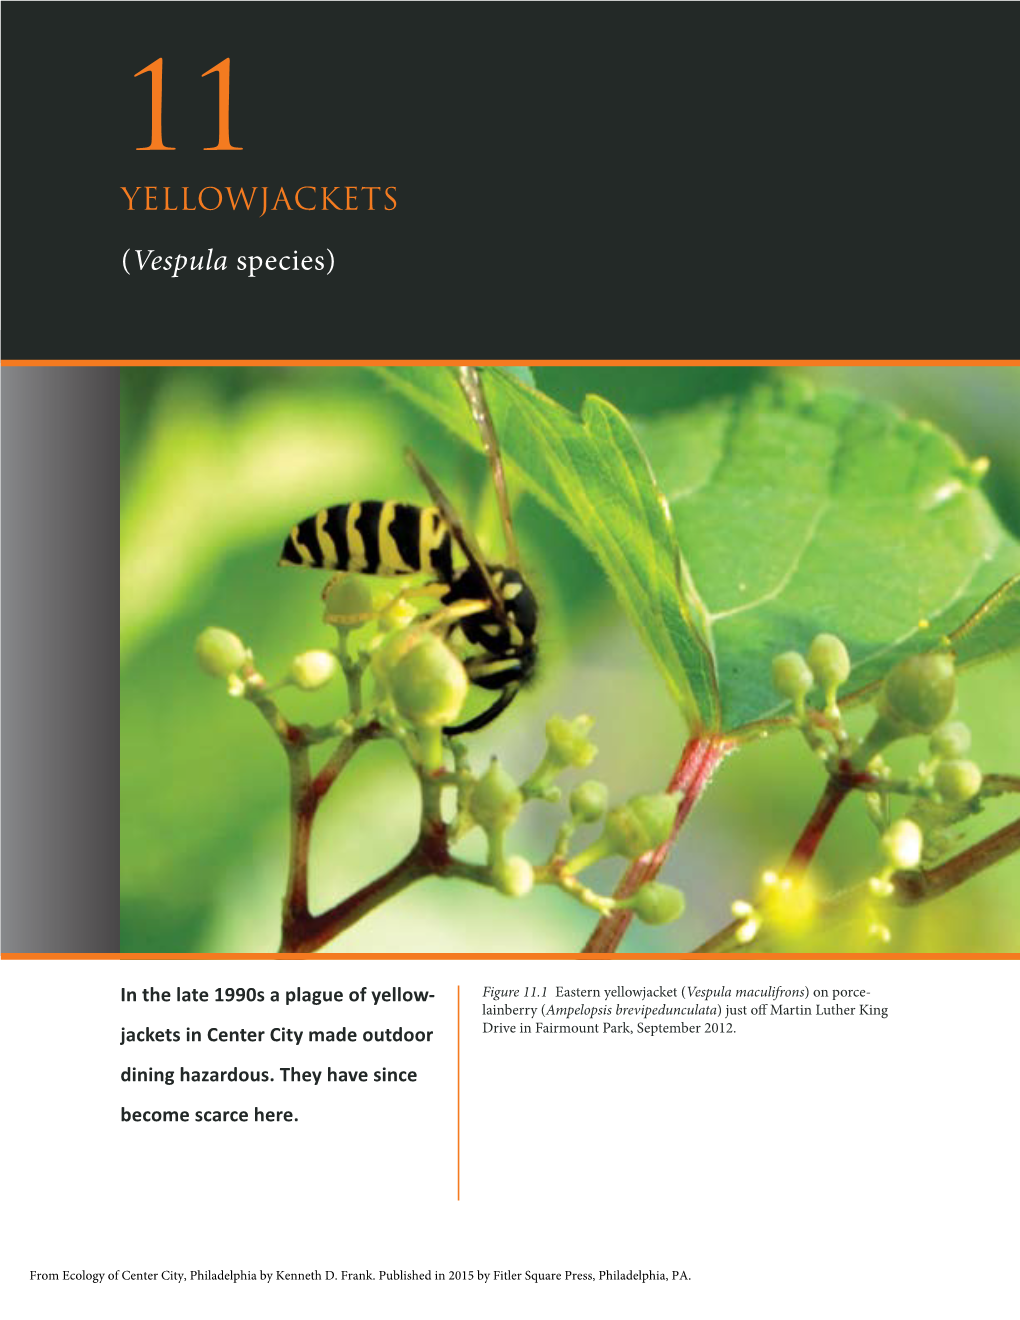 YELLOWJACKETS (Vespula Species)